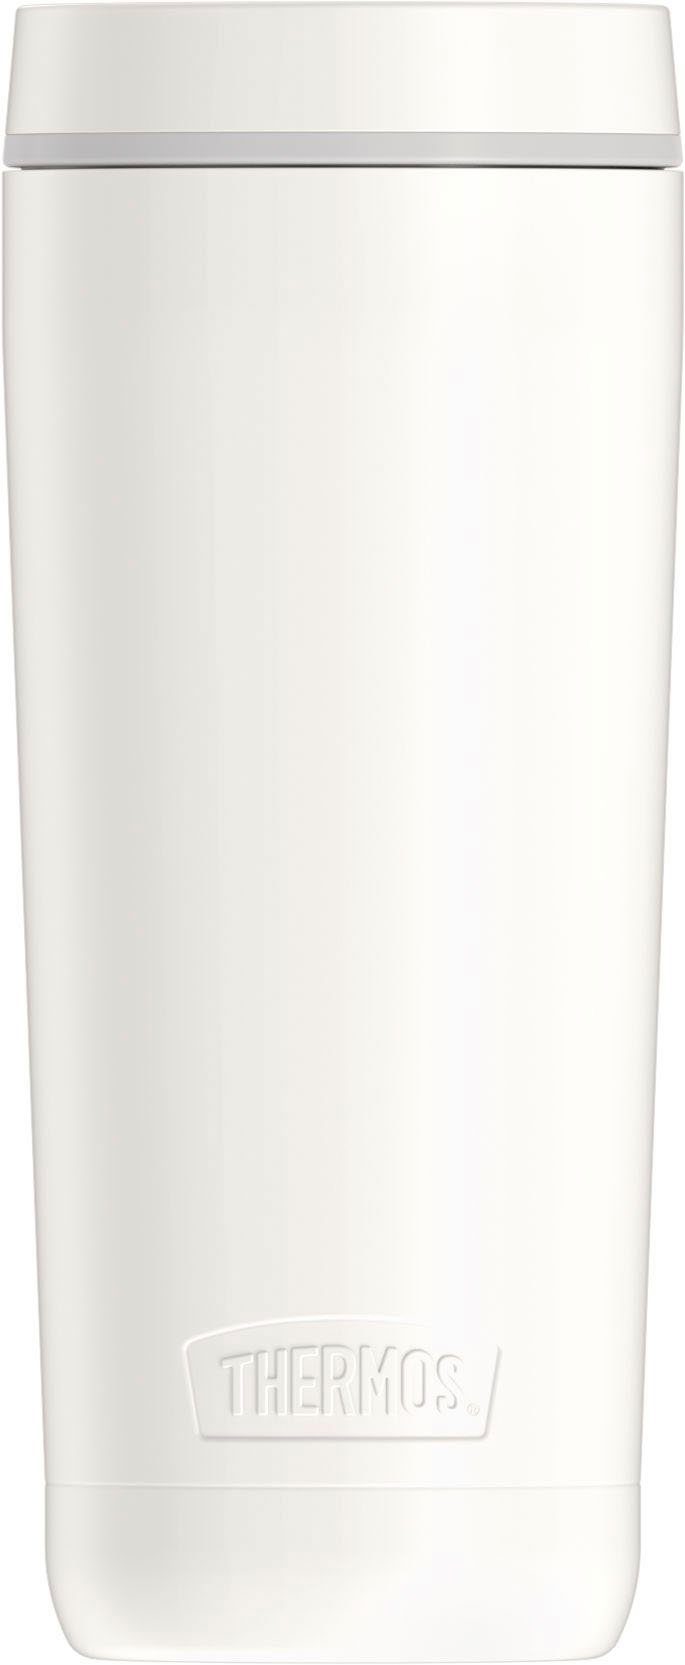 Thermobehälter FOOD doppelwandiger JAR, GUARDIAN mat Silikon, Edelstahl, snow (1-tlg), Edelstahl THERMOS white